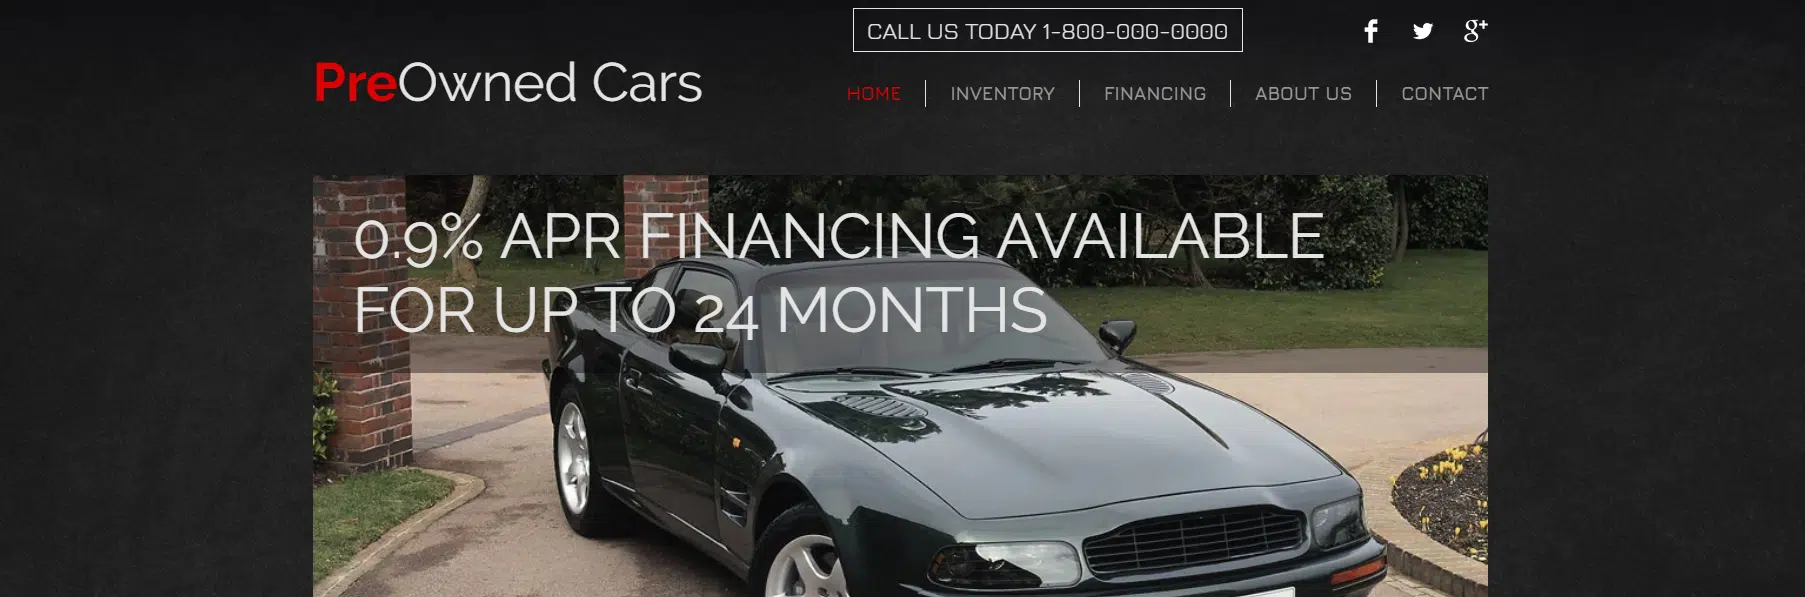 Car Dealership Website Template _ WIX